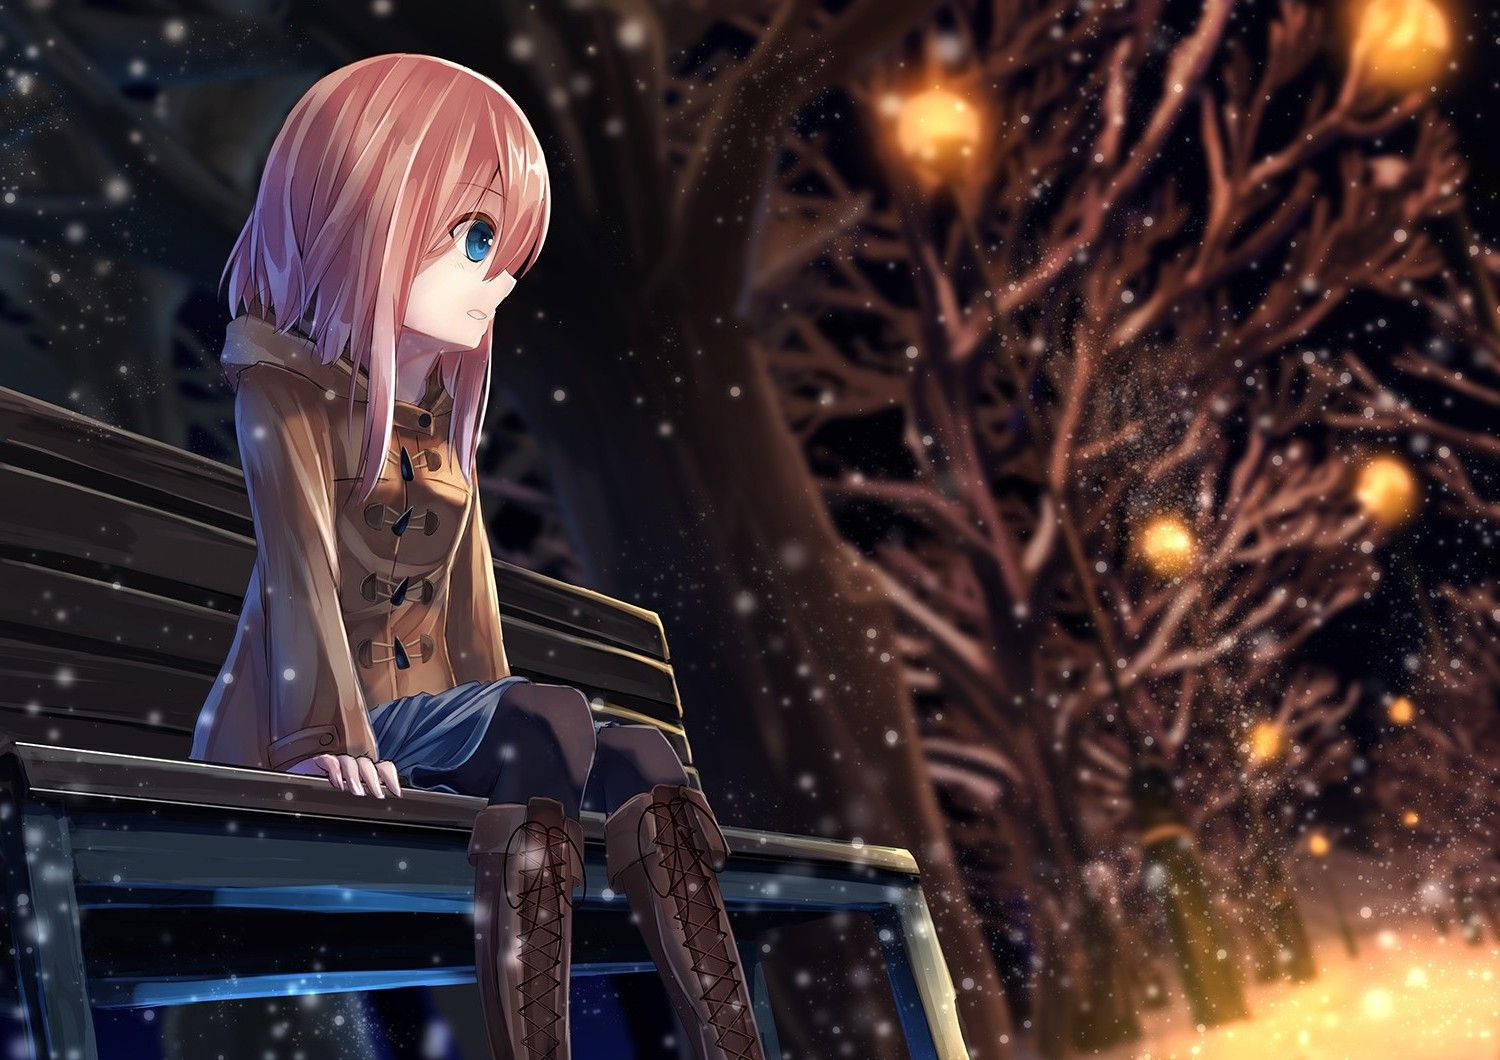 Anime Girl Sad Alone On Park Bench Background